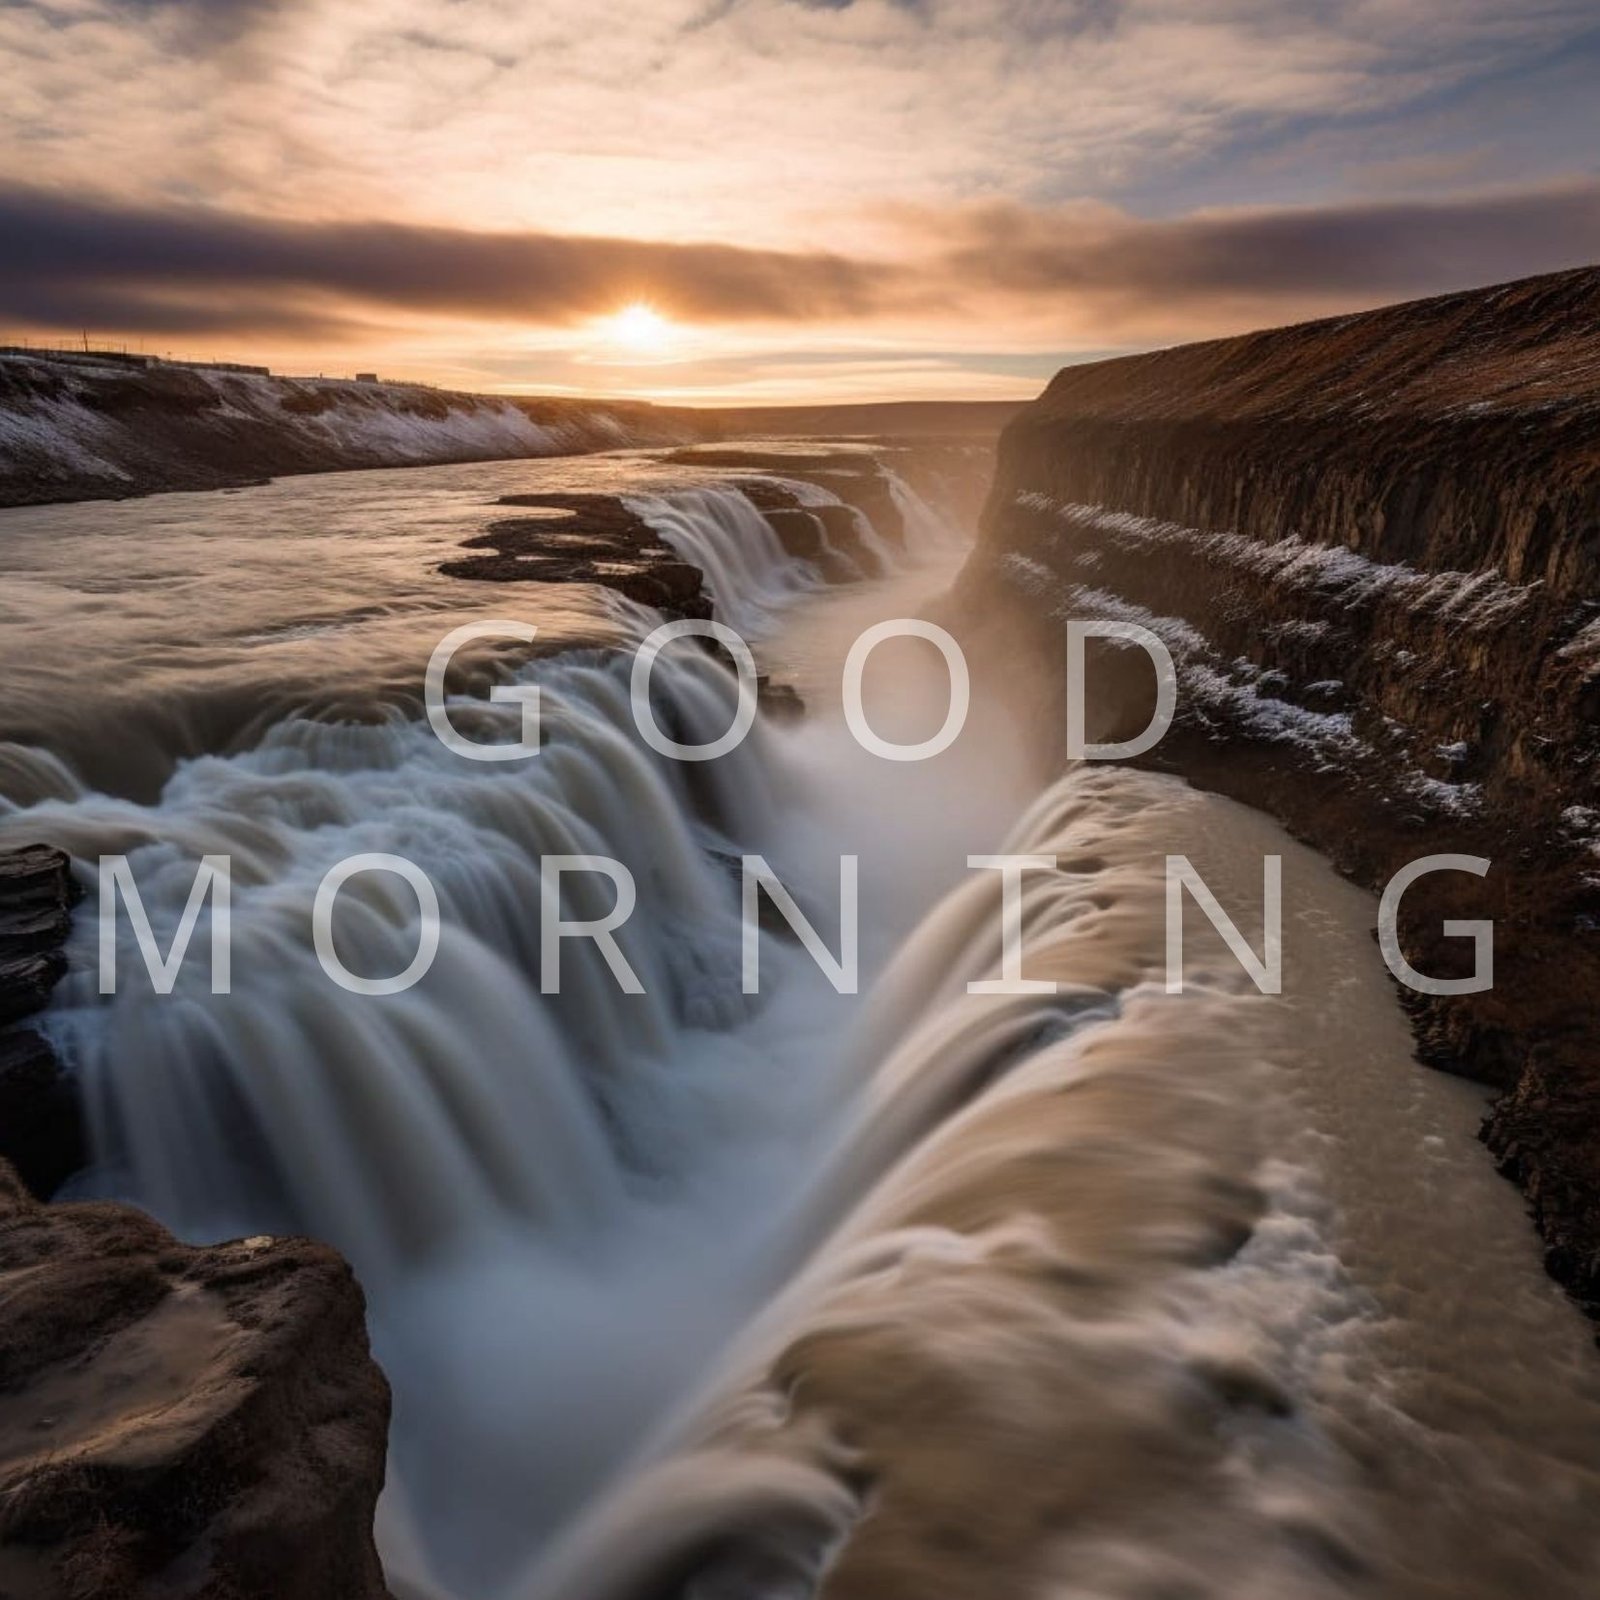 Amazing Good Morning Waterfall Image